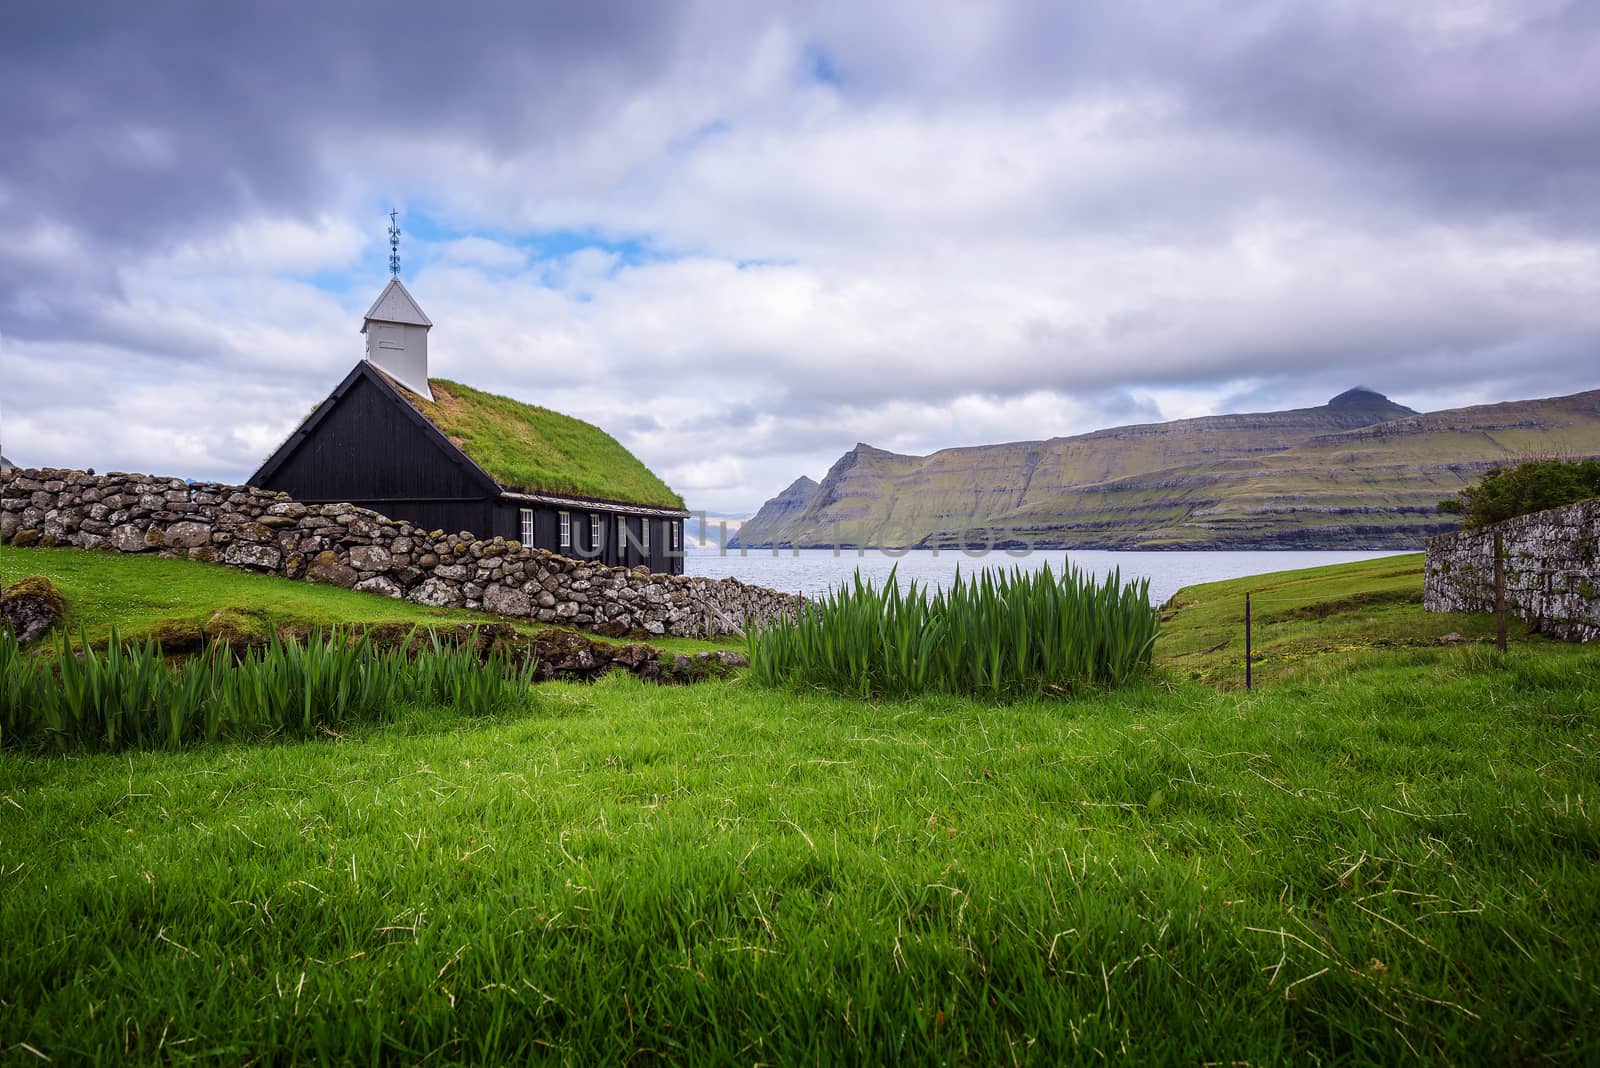 Small wooden village church on the sea shore in Faroe Islands, Denmark by nickfox